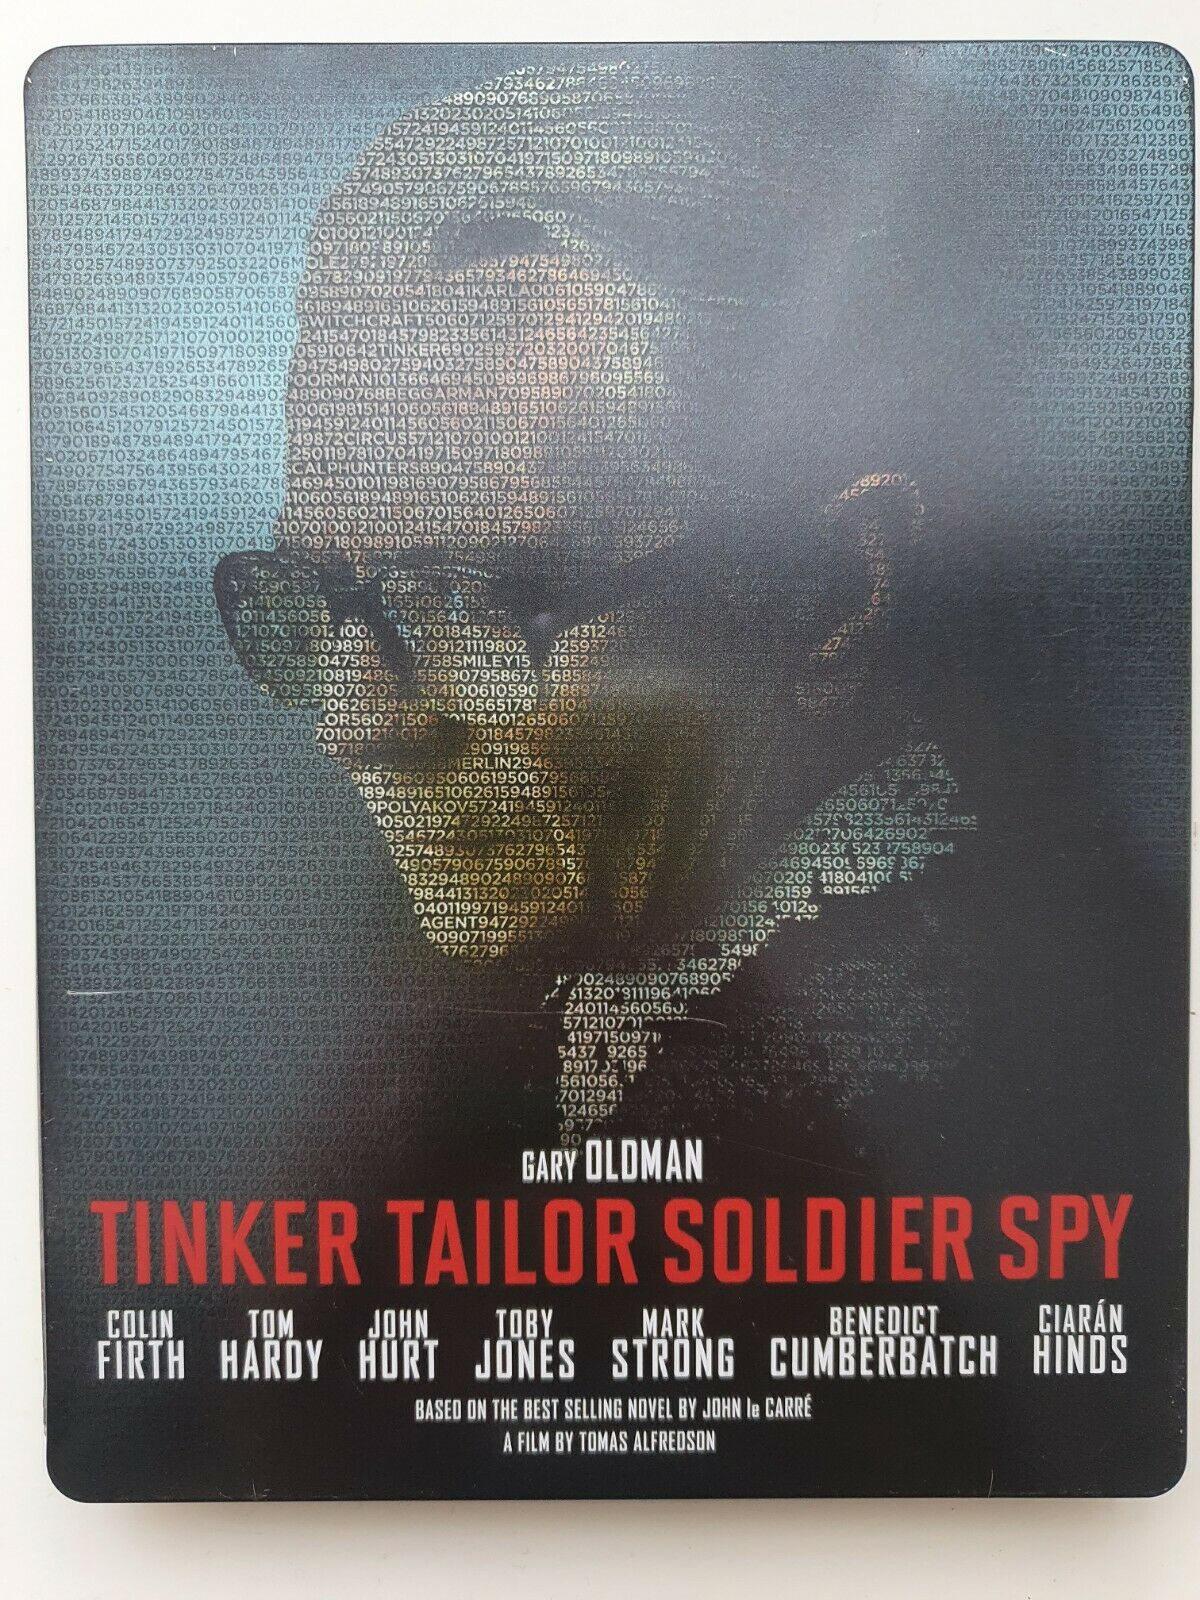 5055201821317 Tinker Tailor Soldier Spy (Ltd Edition Steelbook) - Blu-ray + DVD 2011 GOOD